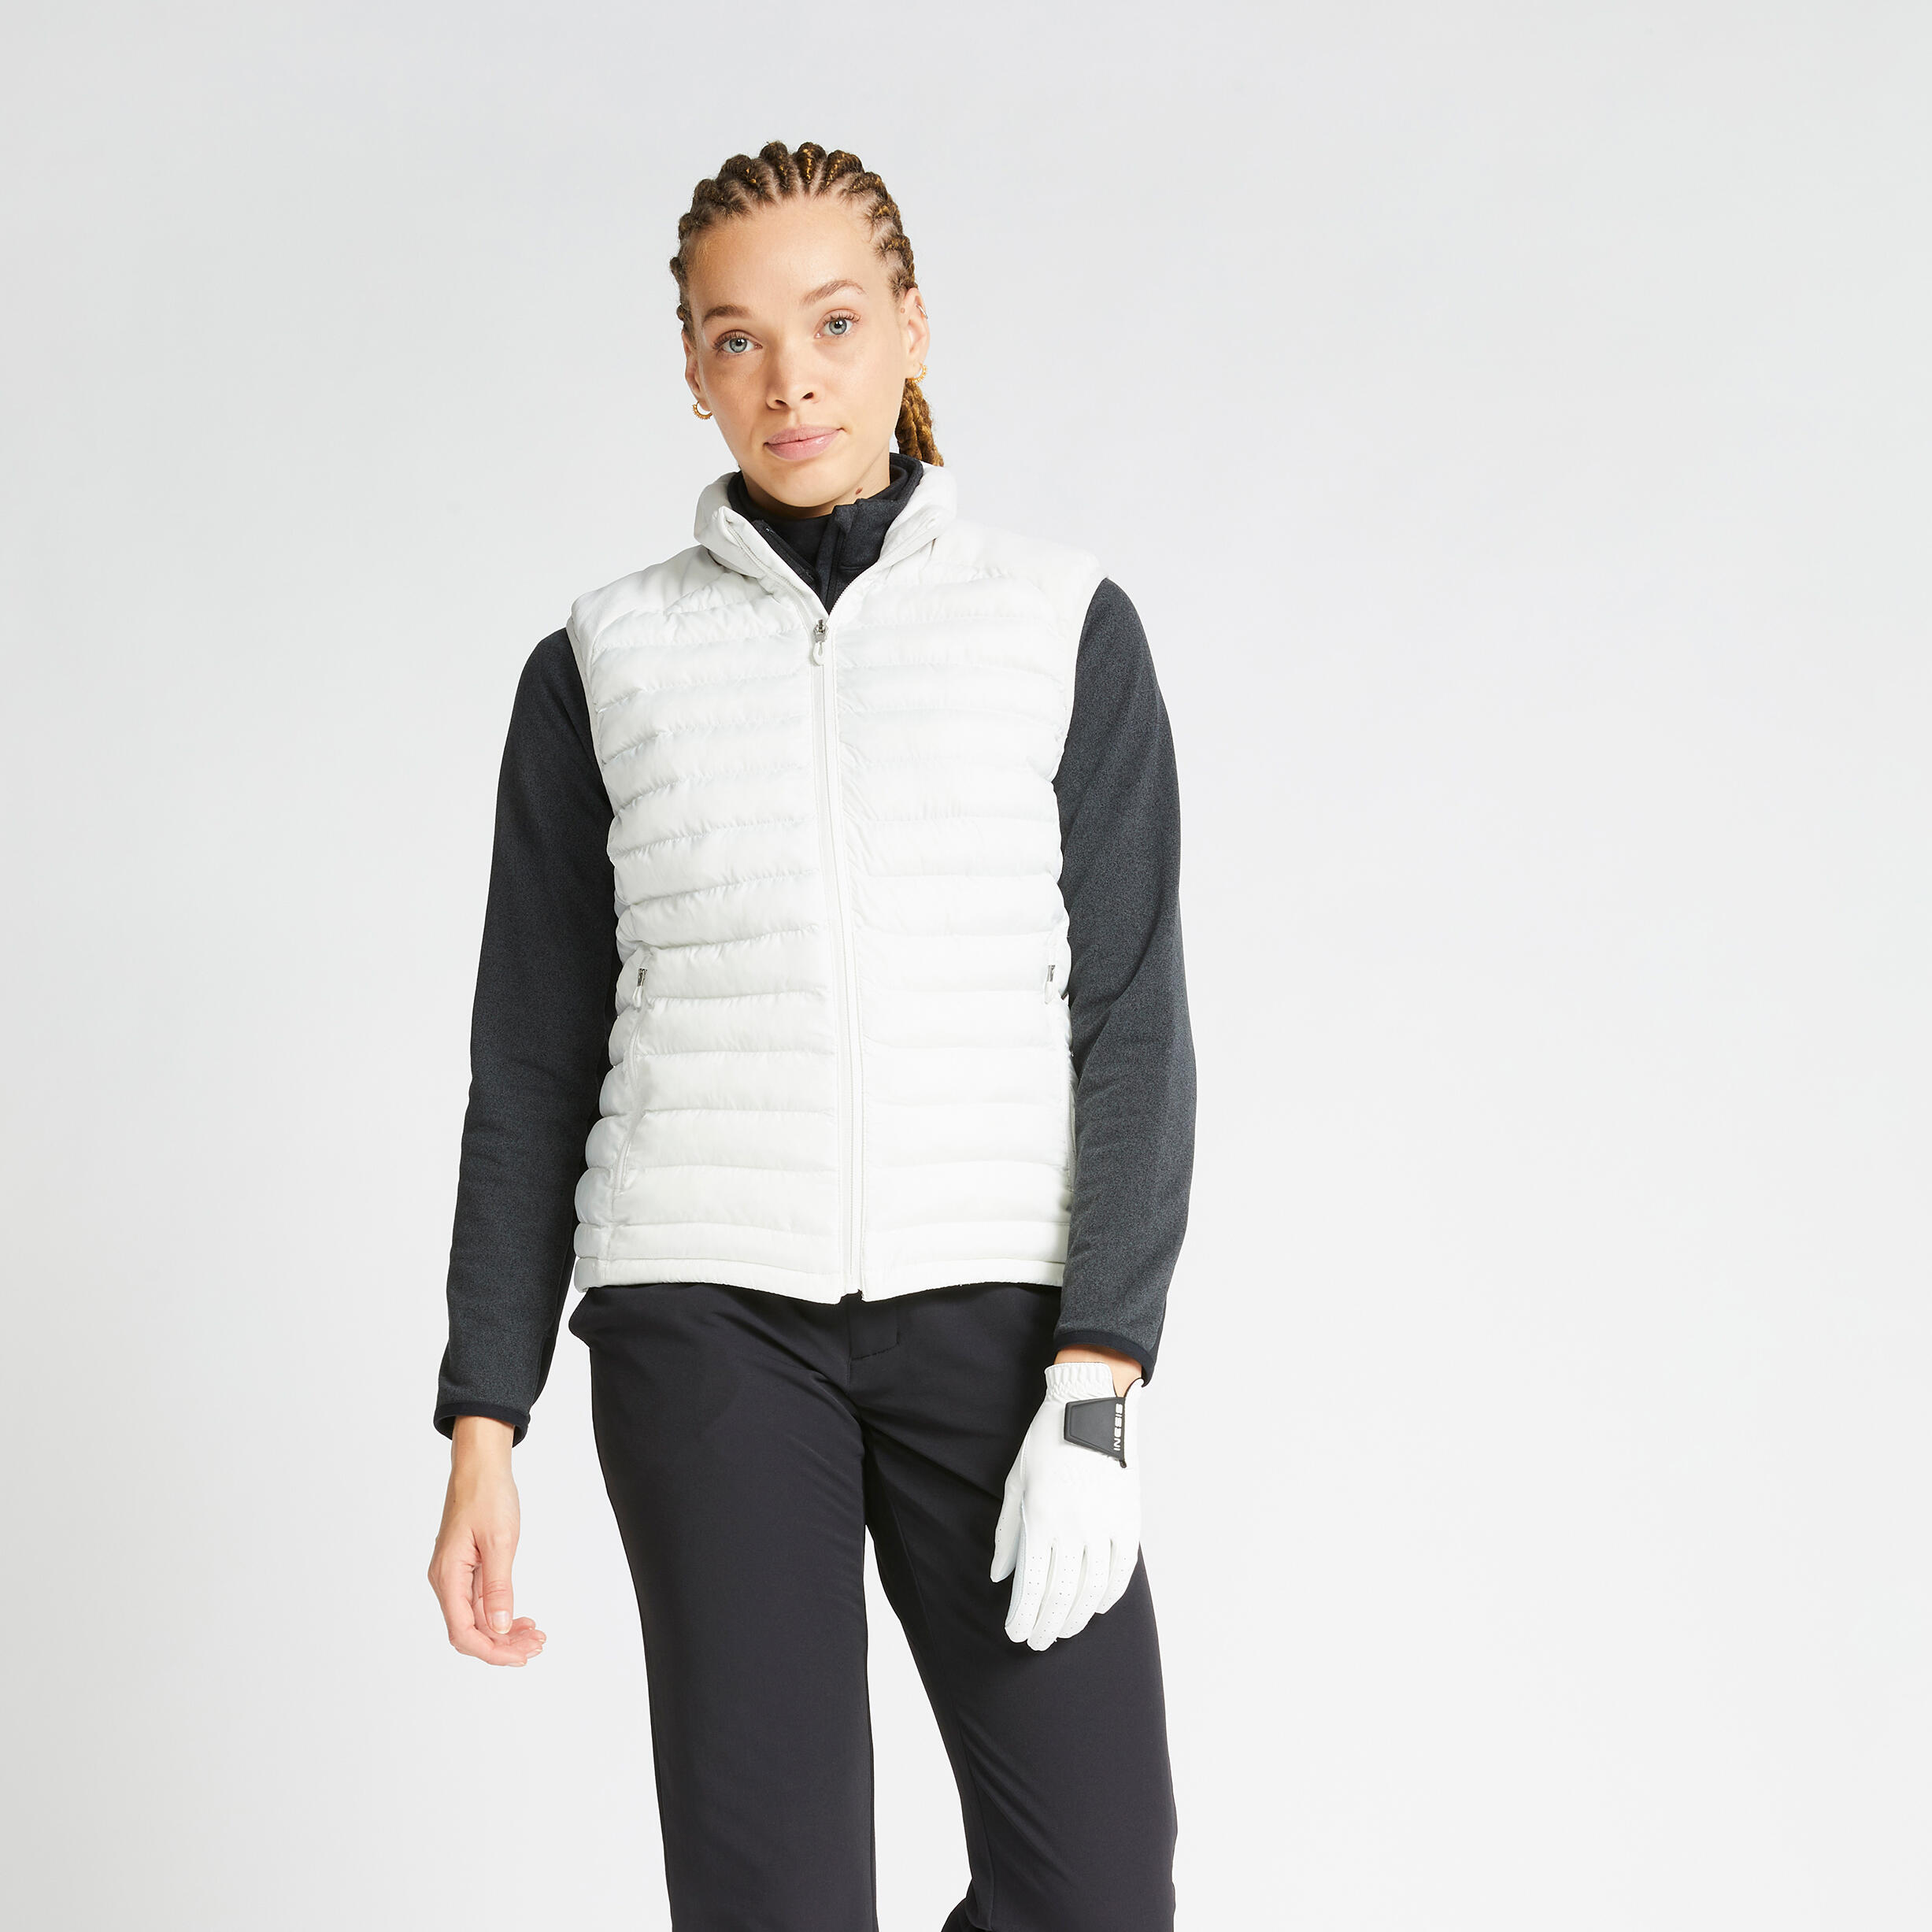 INESIS Women's golf winter sleeveless padded jacket CW500 - off-white